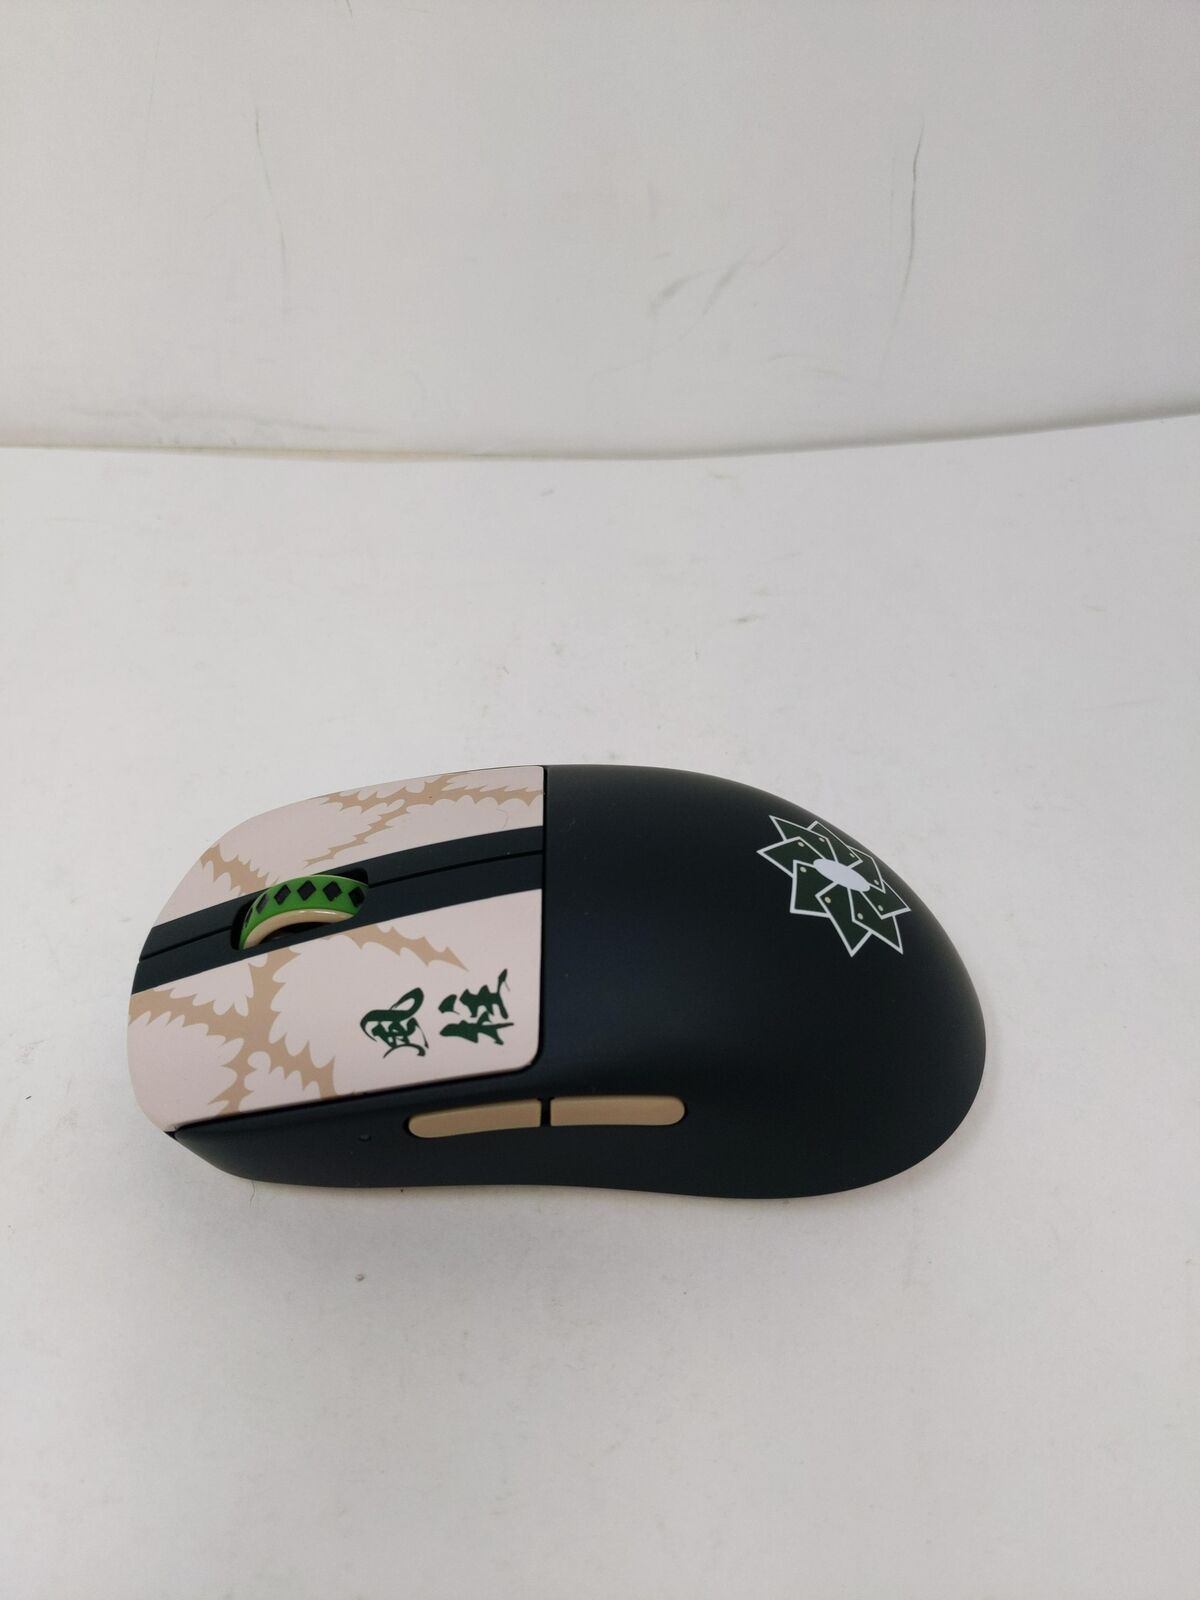 [pulsar X Demon Slayer] X2A Medium Wireless Gaming Mouse, Ultra Lightweight